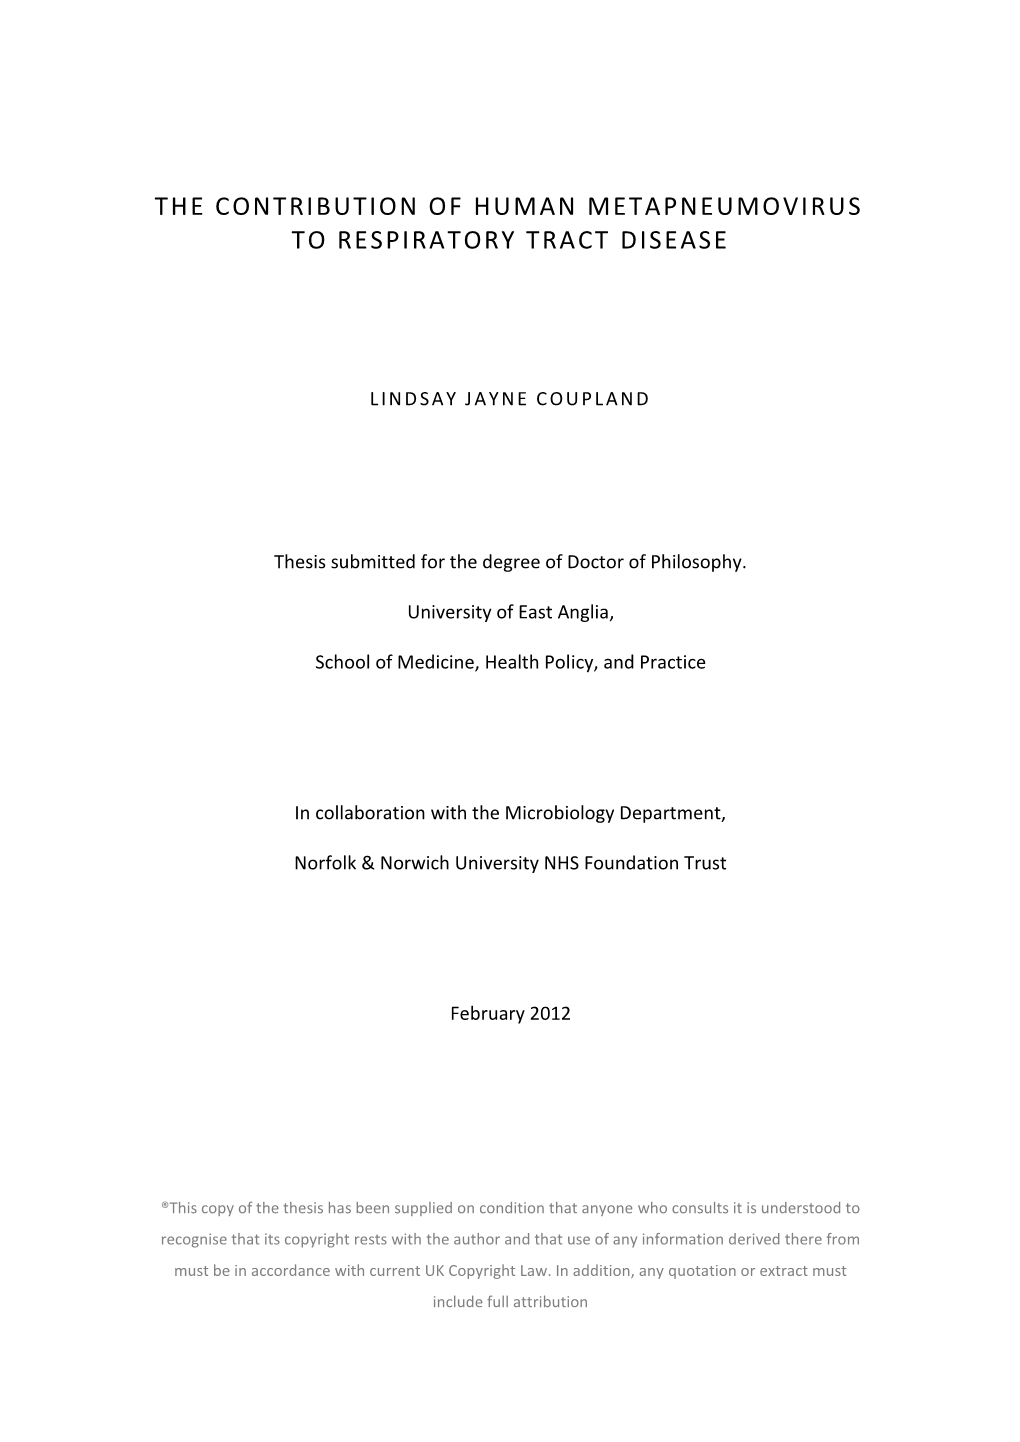 The Contribution of Human Metapneumovirus to Respiratory Tract Disease